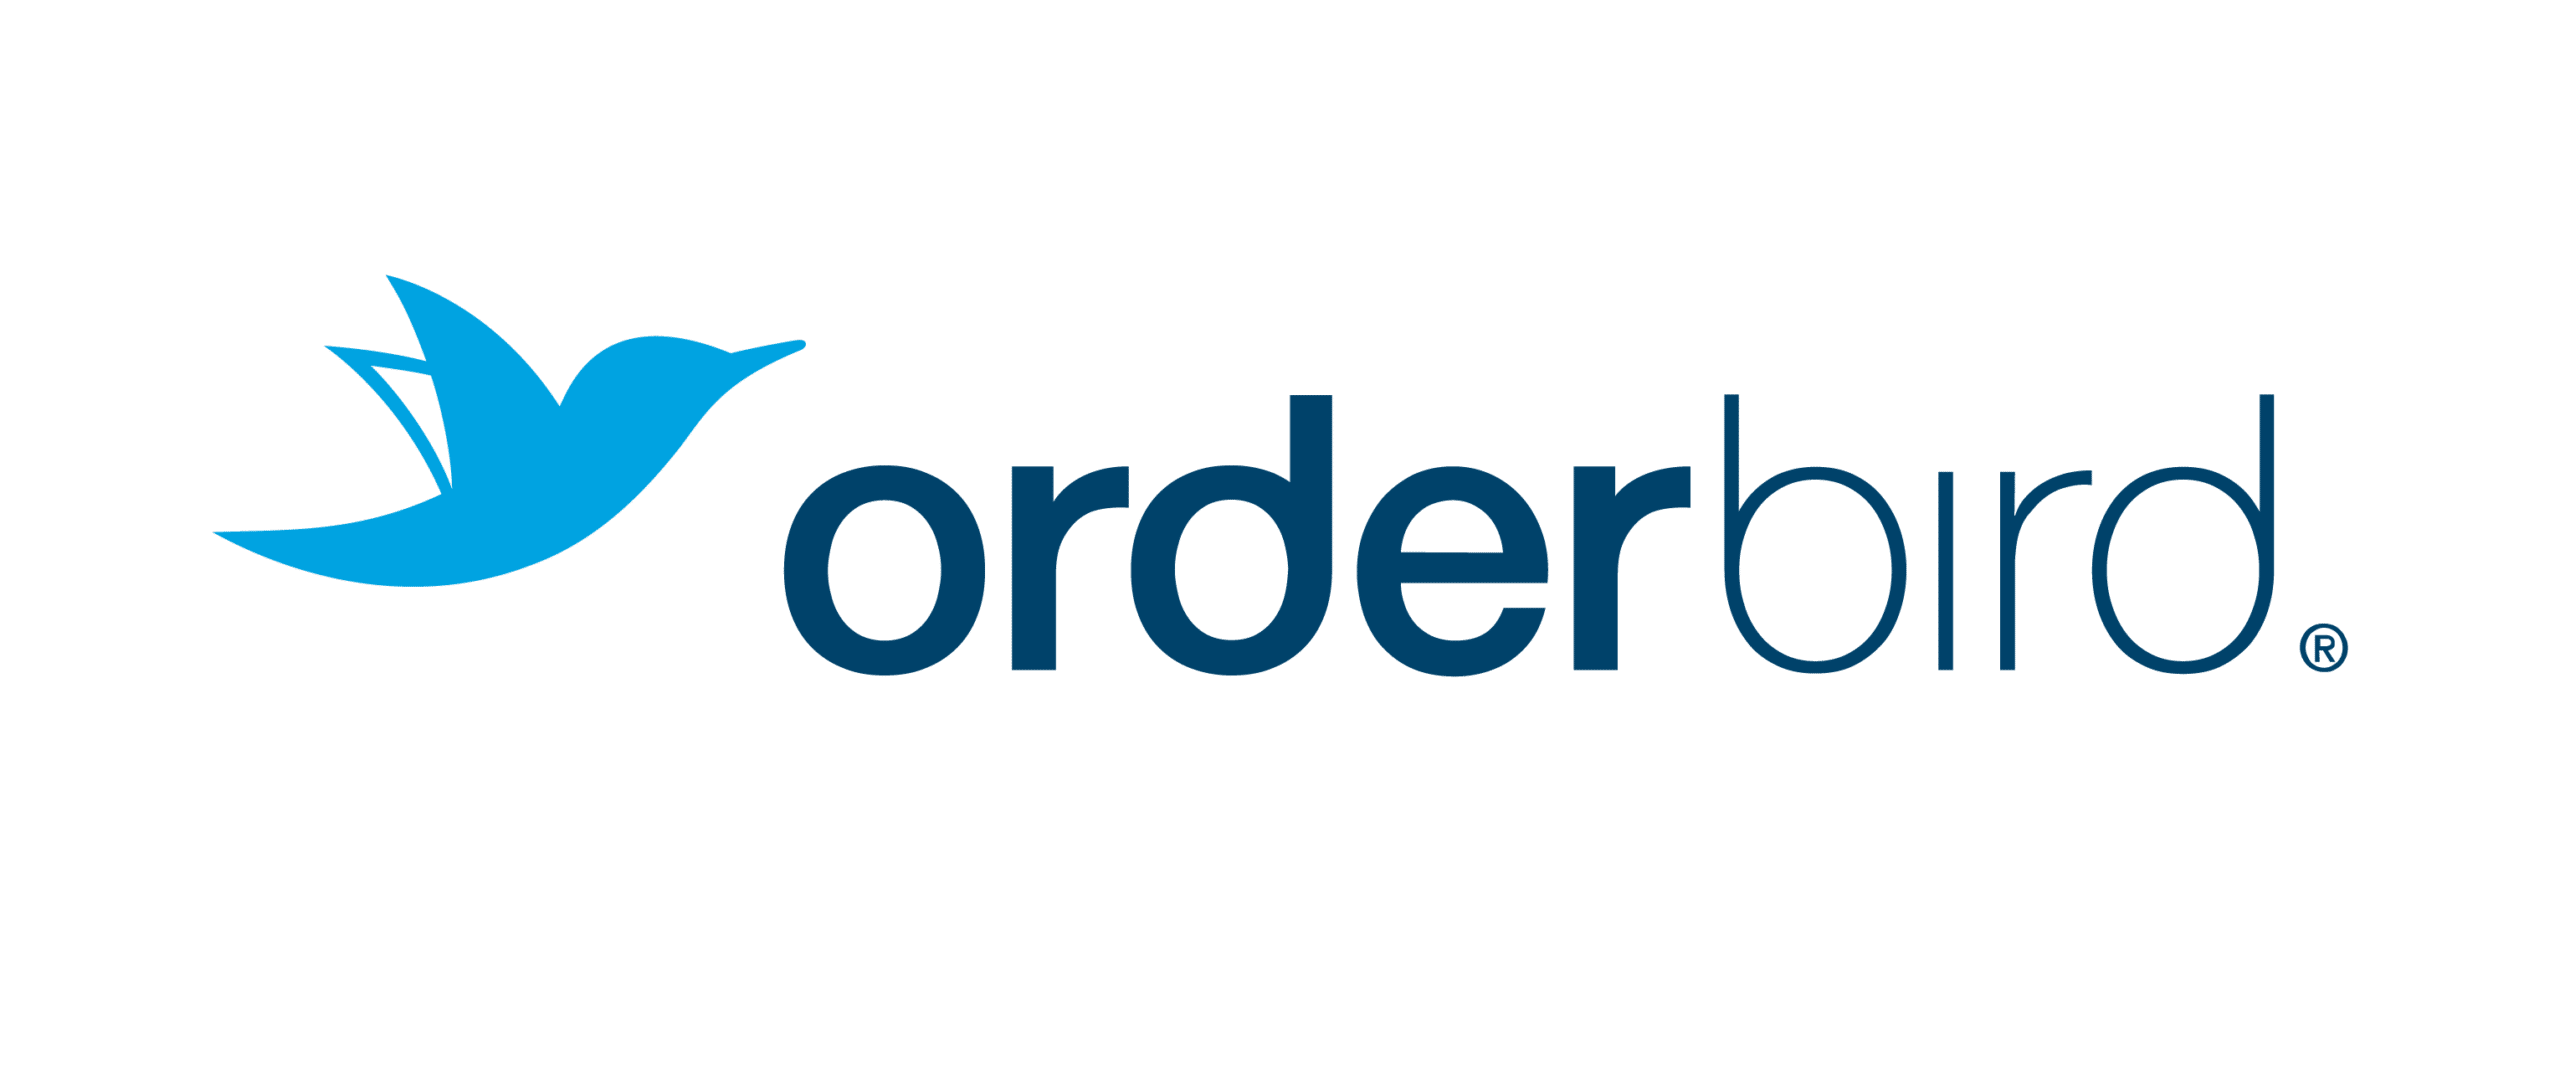 Orderbird-logo